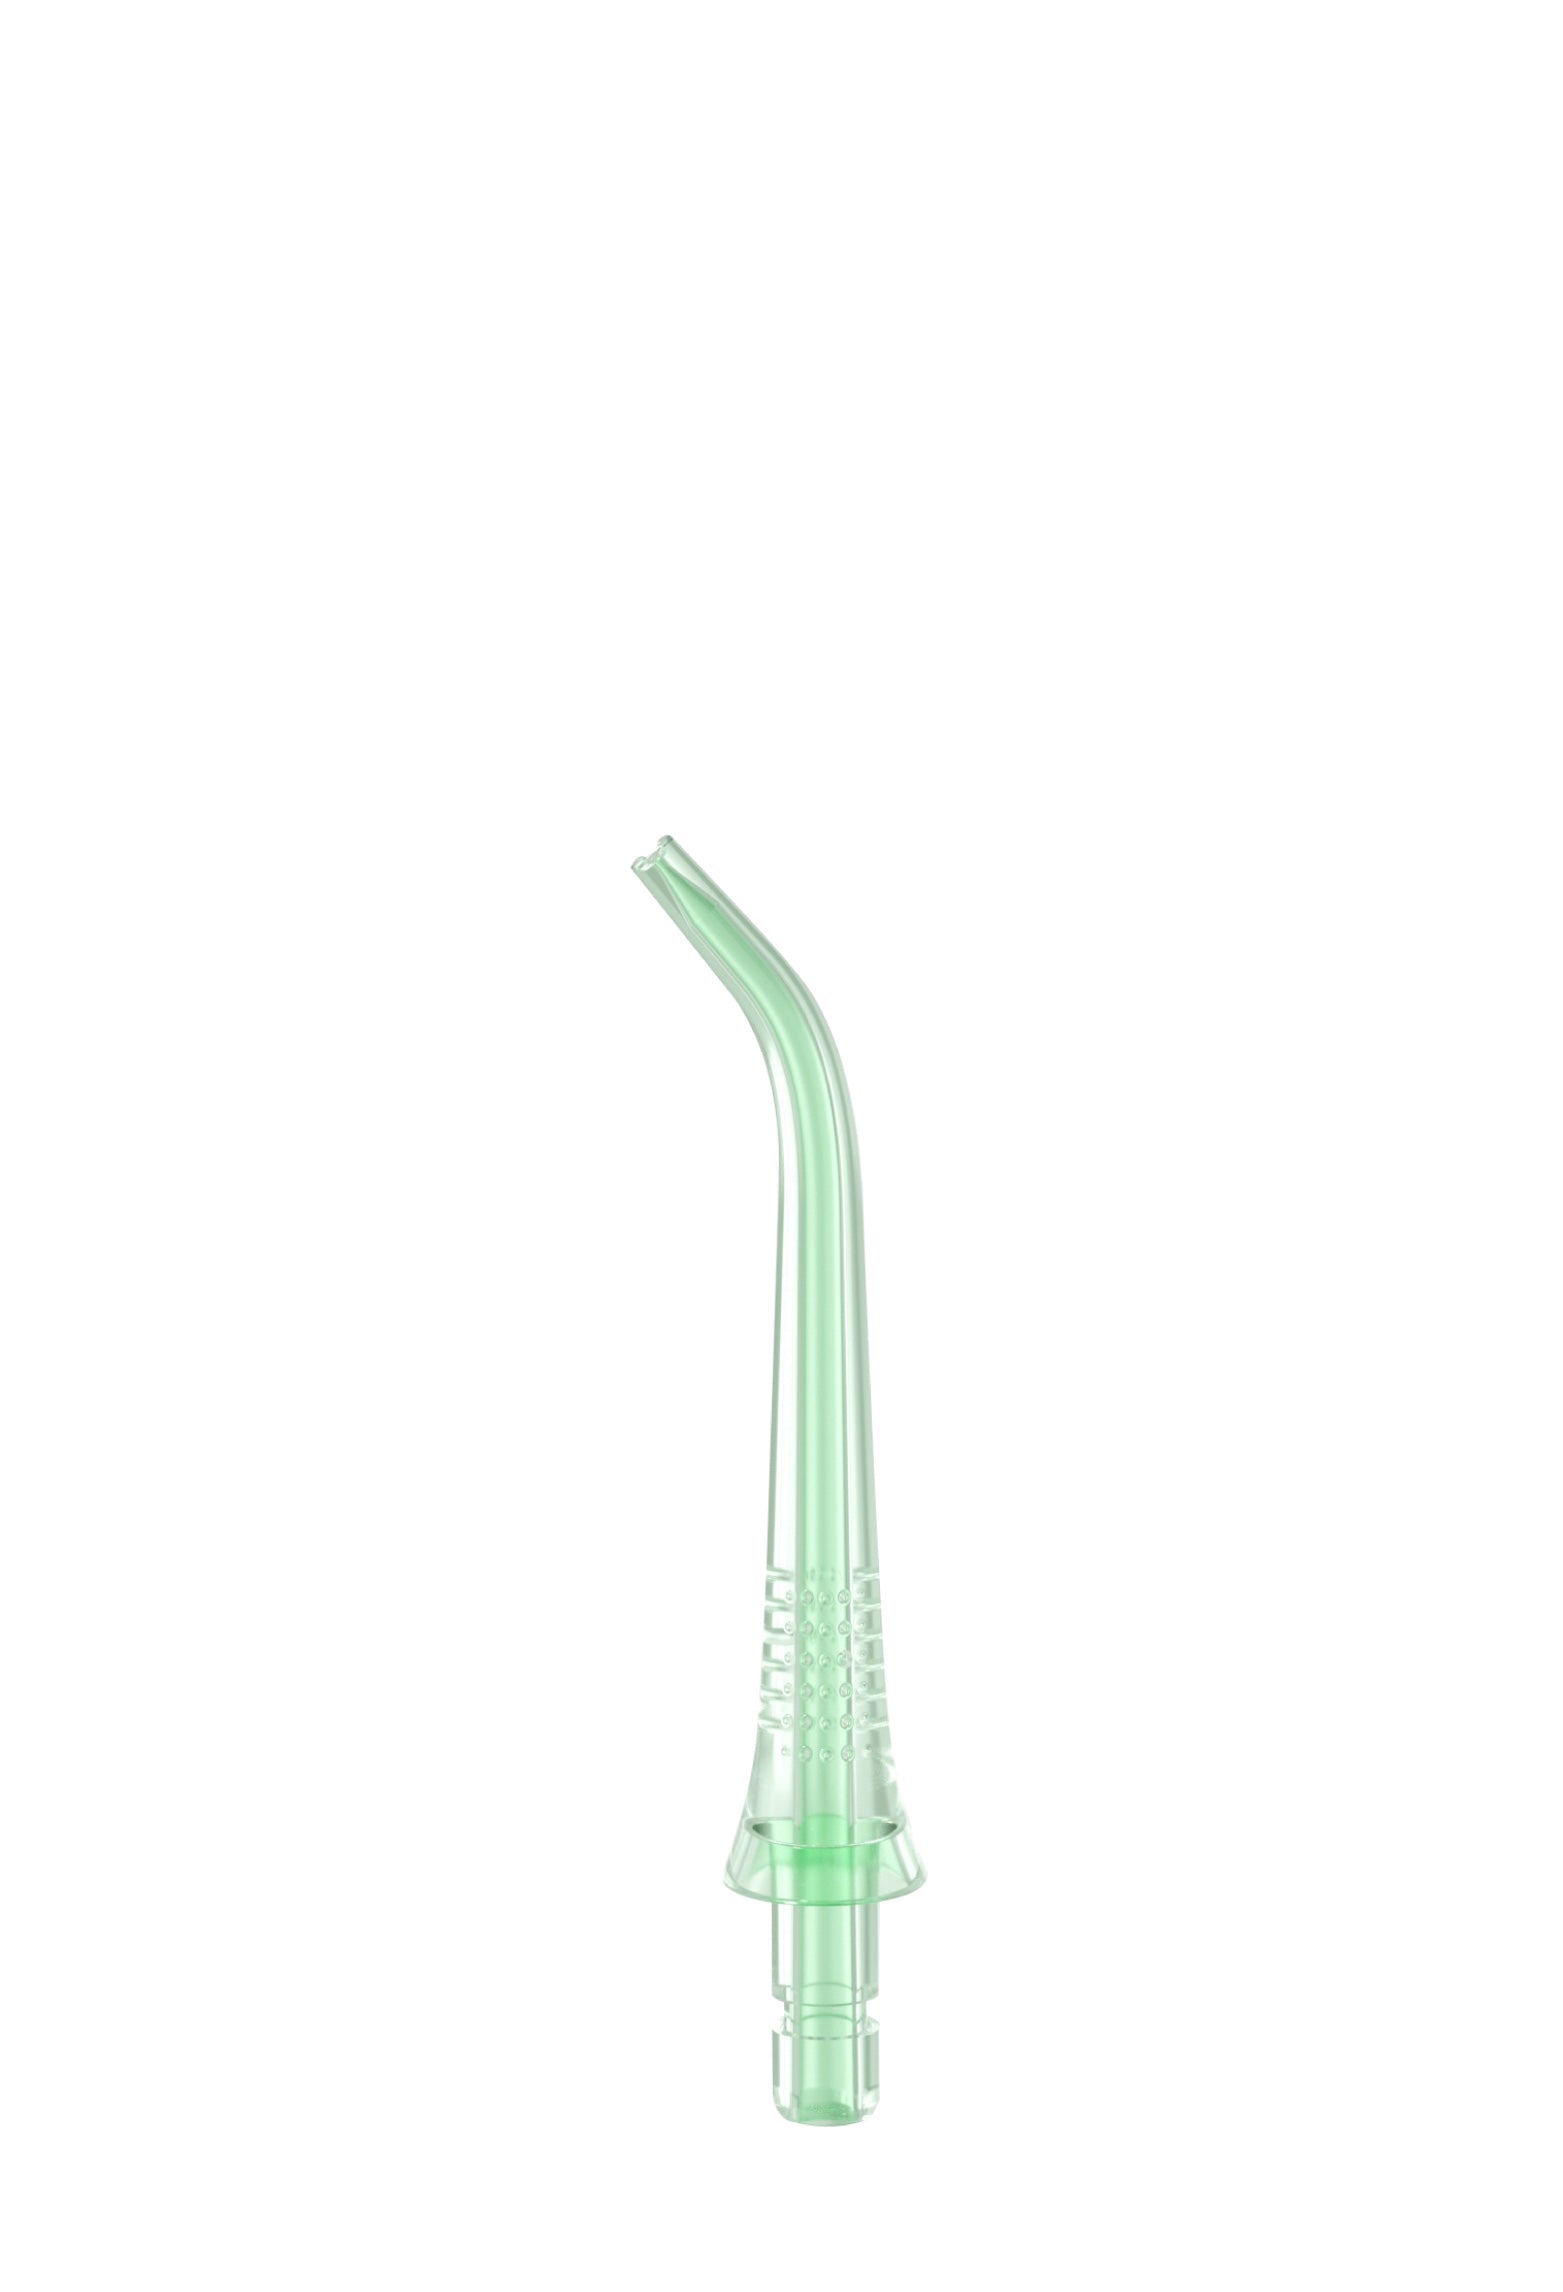 Oclean W10 Portable Dental Water Flosser Nozzles-Dental Water Jets-Oclean US Store